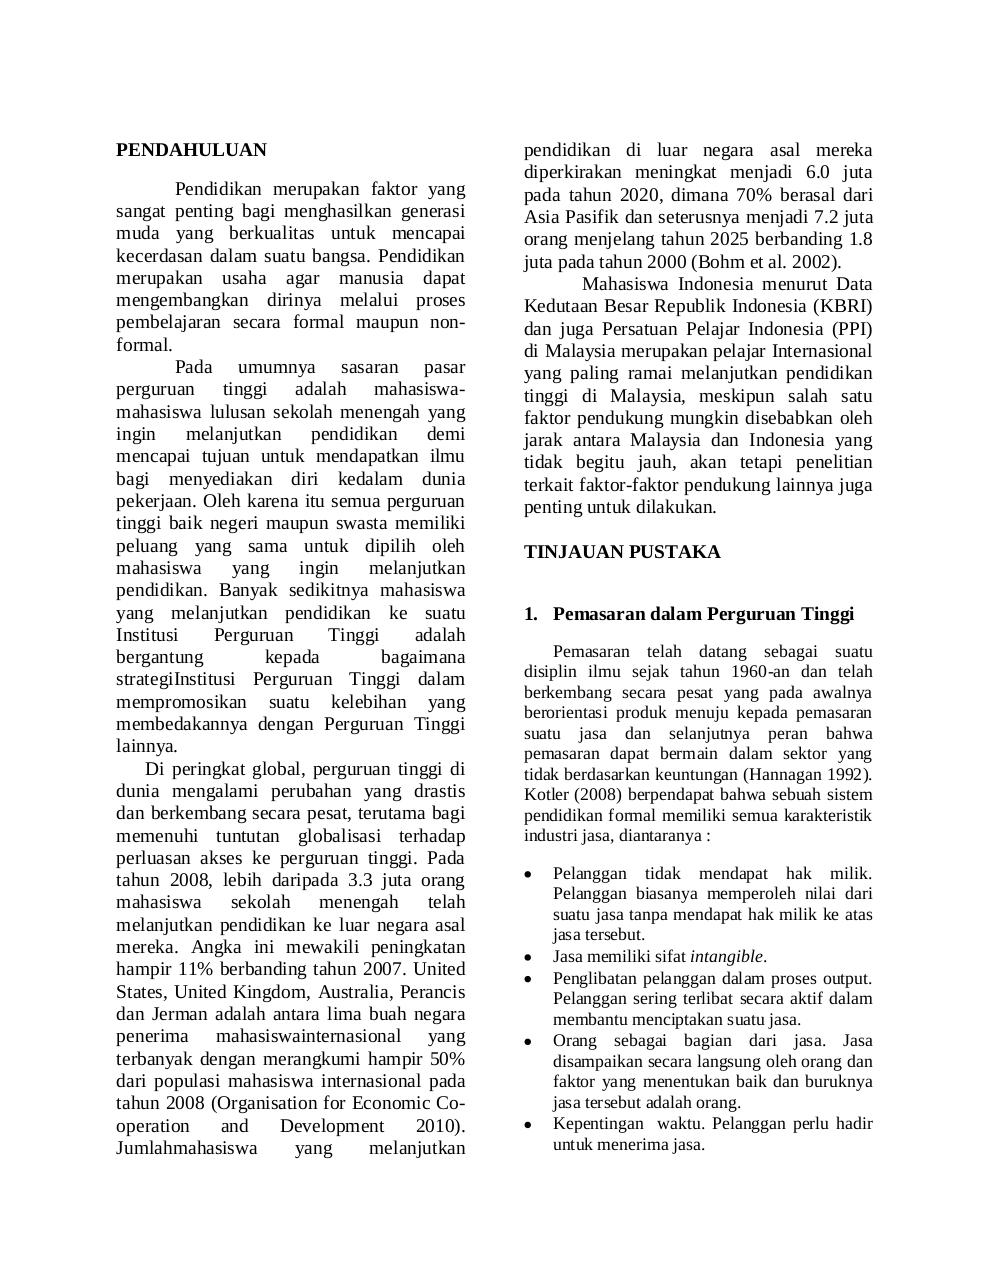 ASTRI AYU ok.pdf - page 2/13